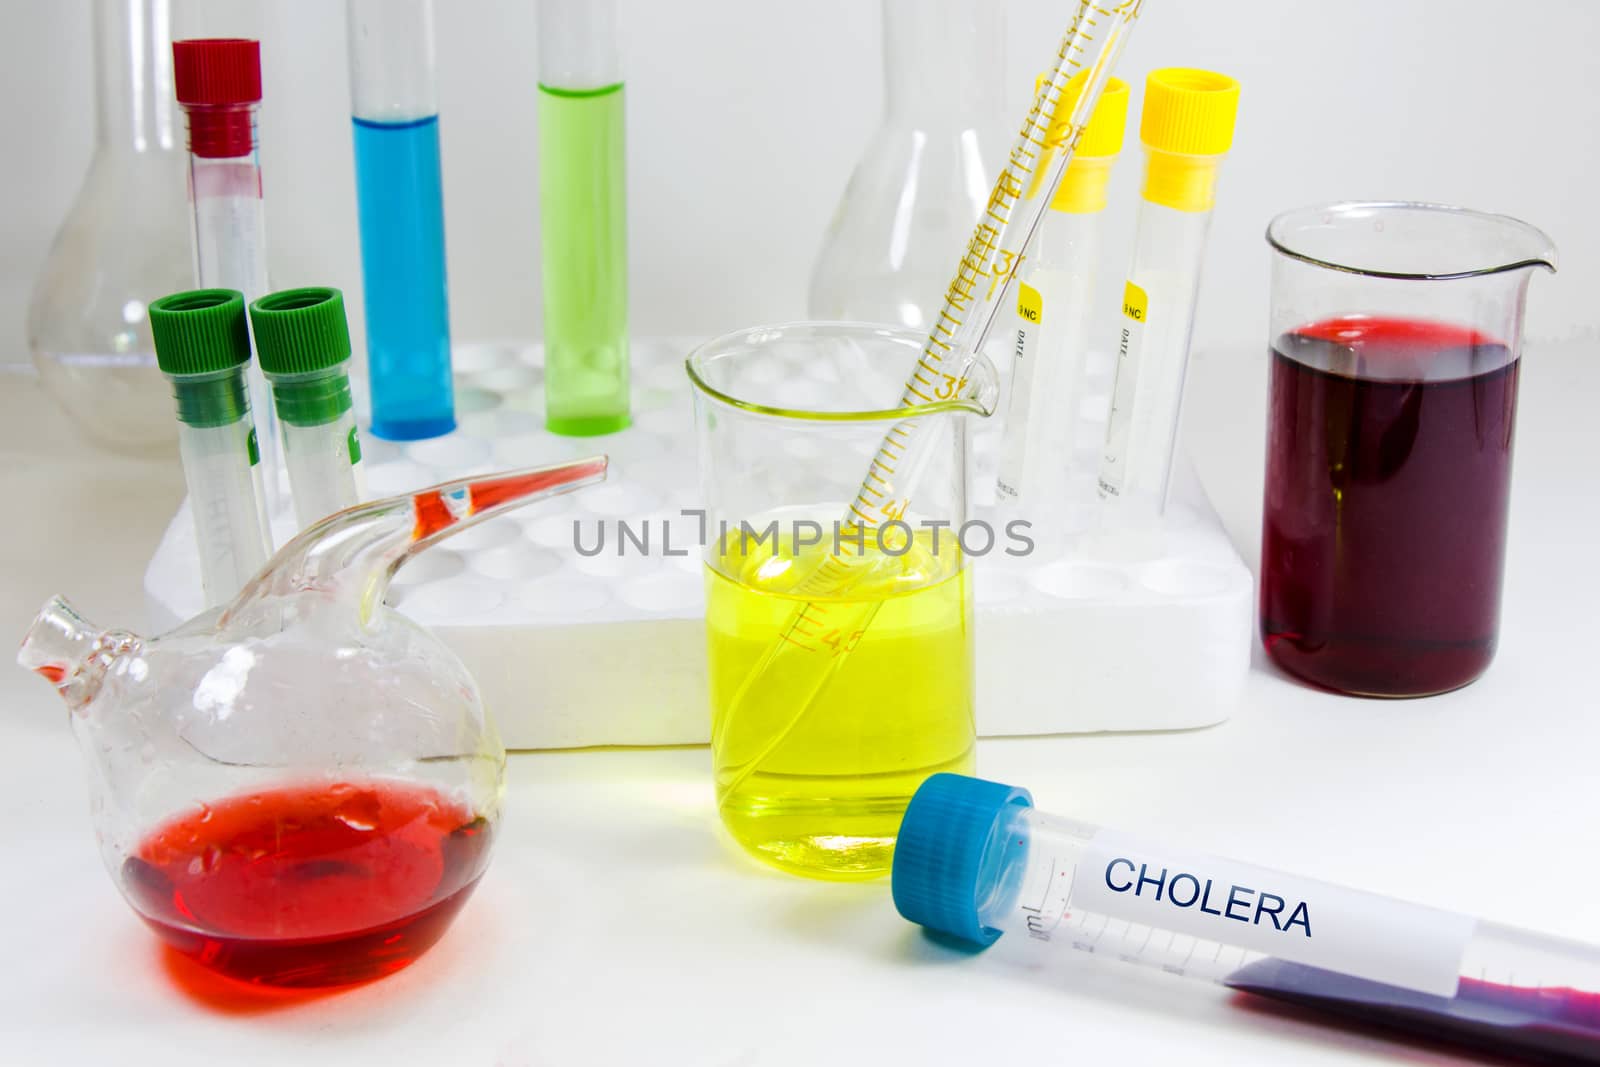 Cholera lab test, blood tube sample by Taidundua